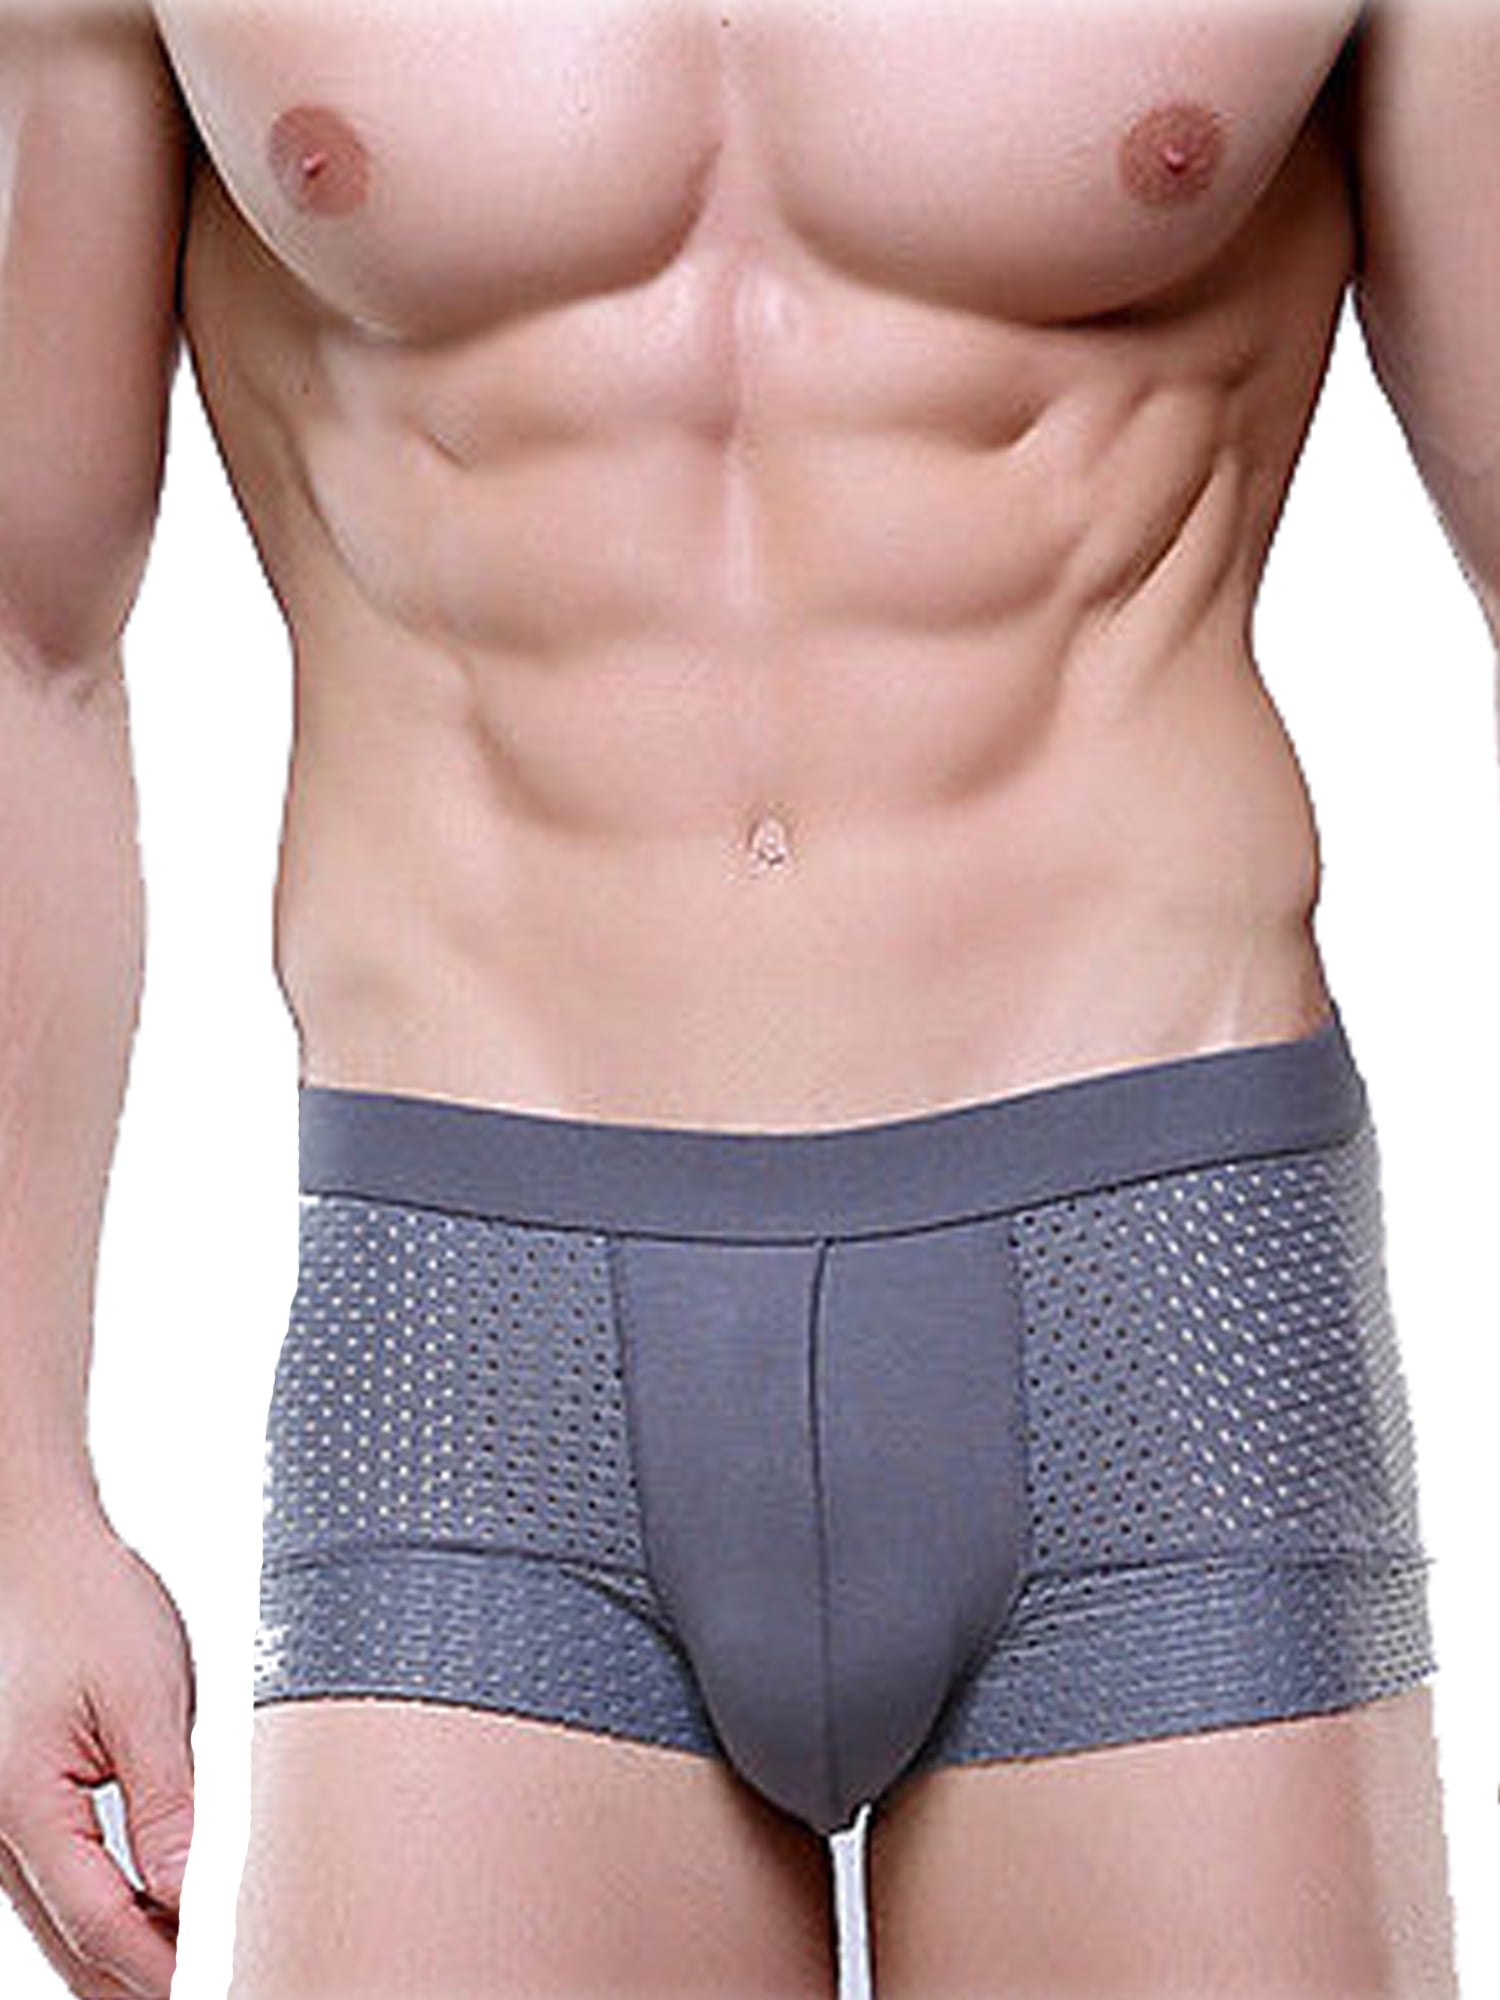 OCEAN-STORE Men Print Underwear Knickers Boxer Briefs Shorts Bulge Pouch Underpants